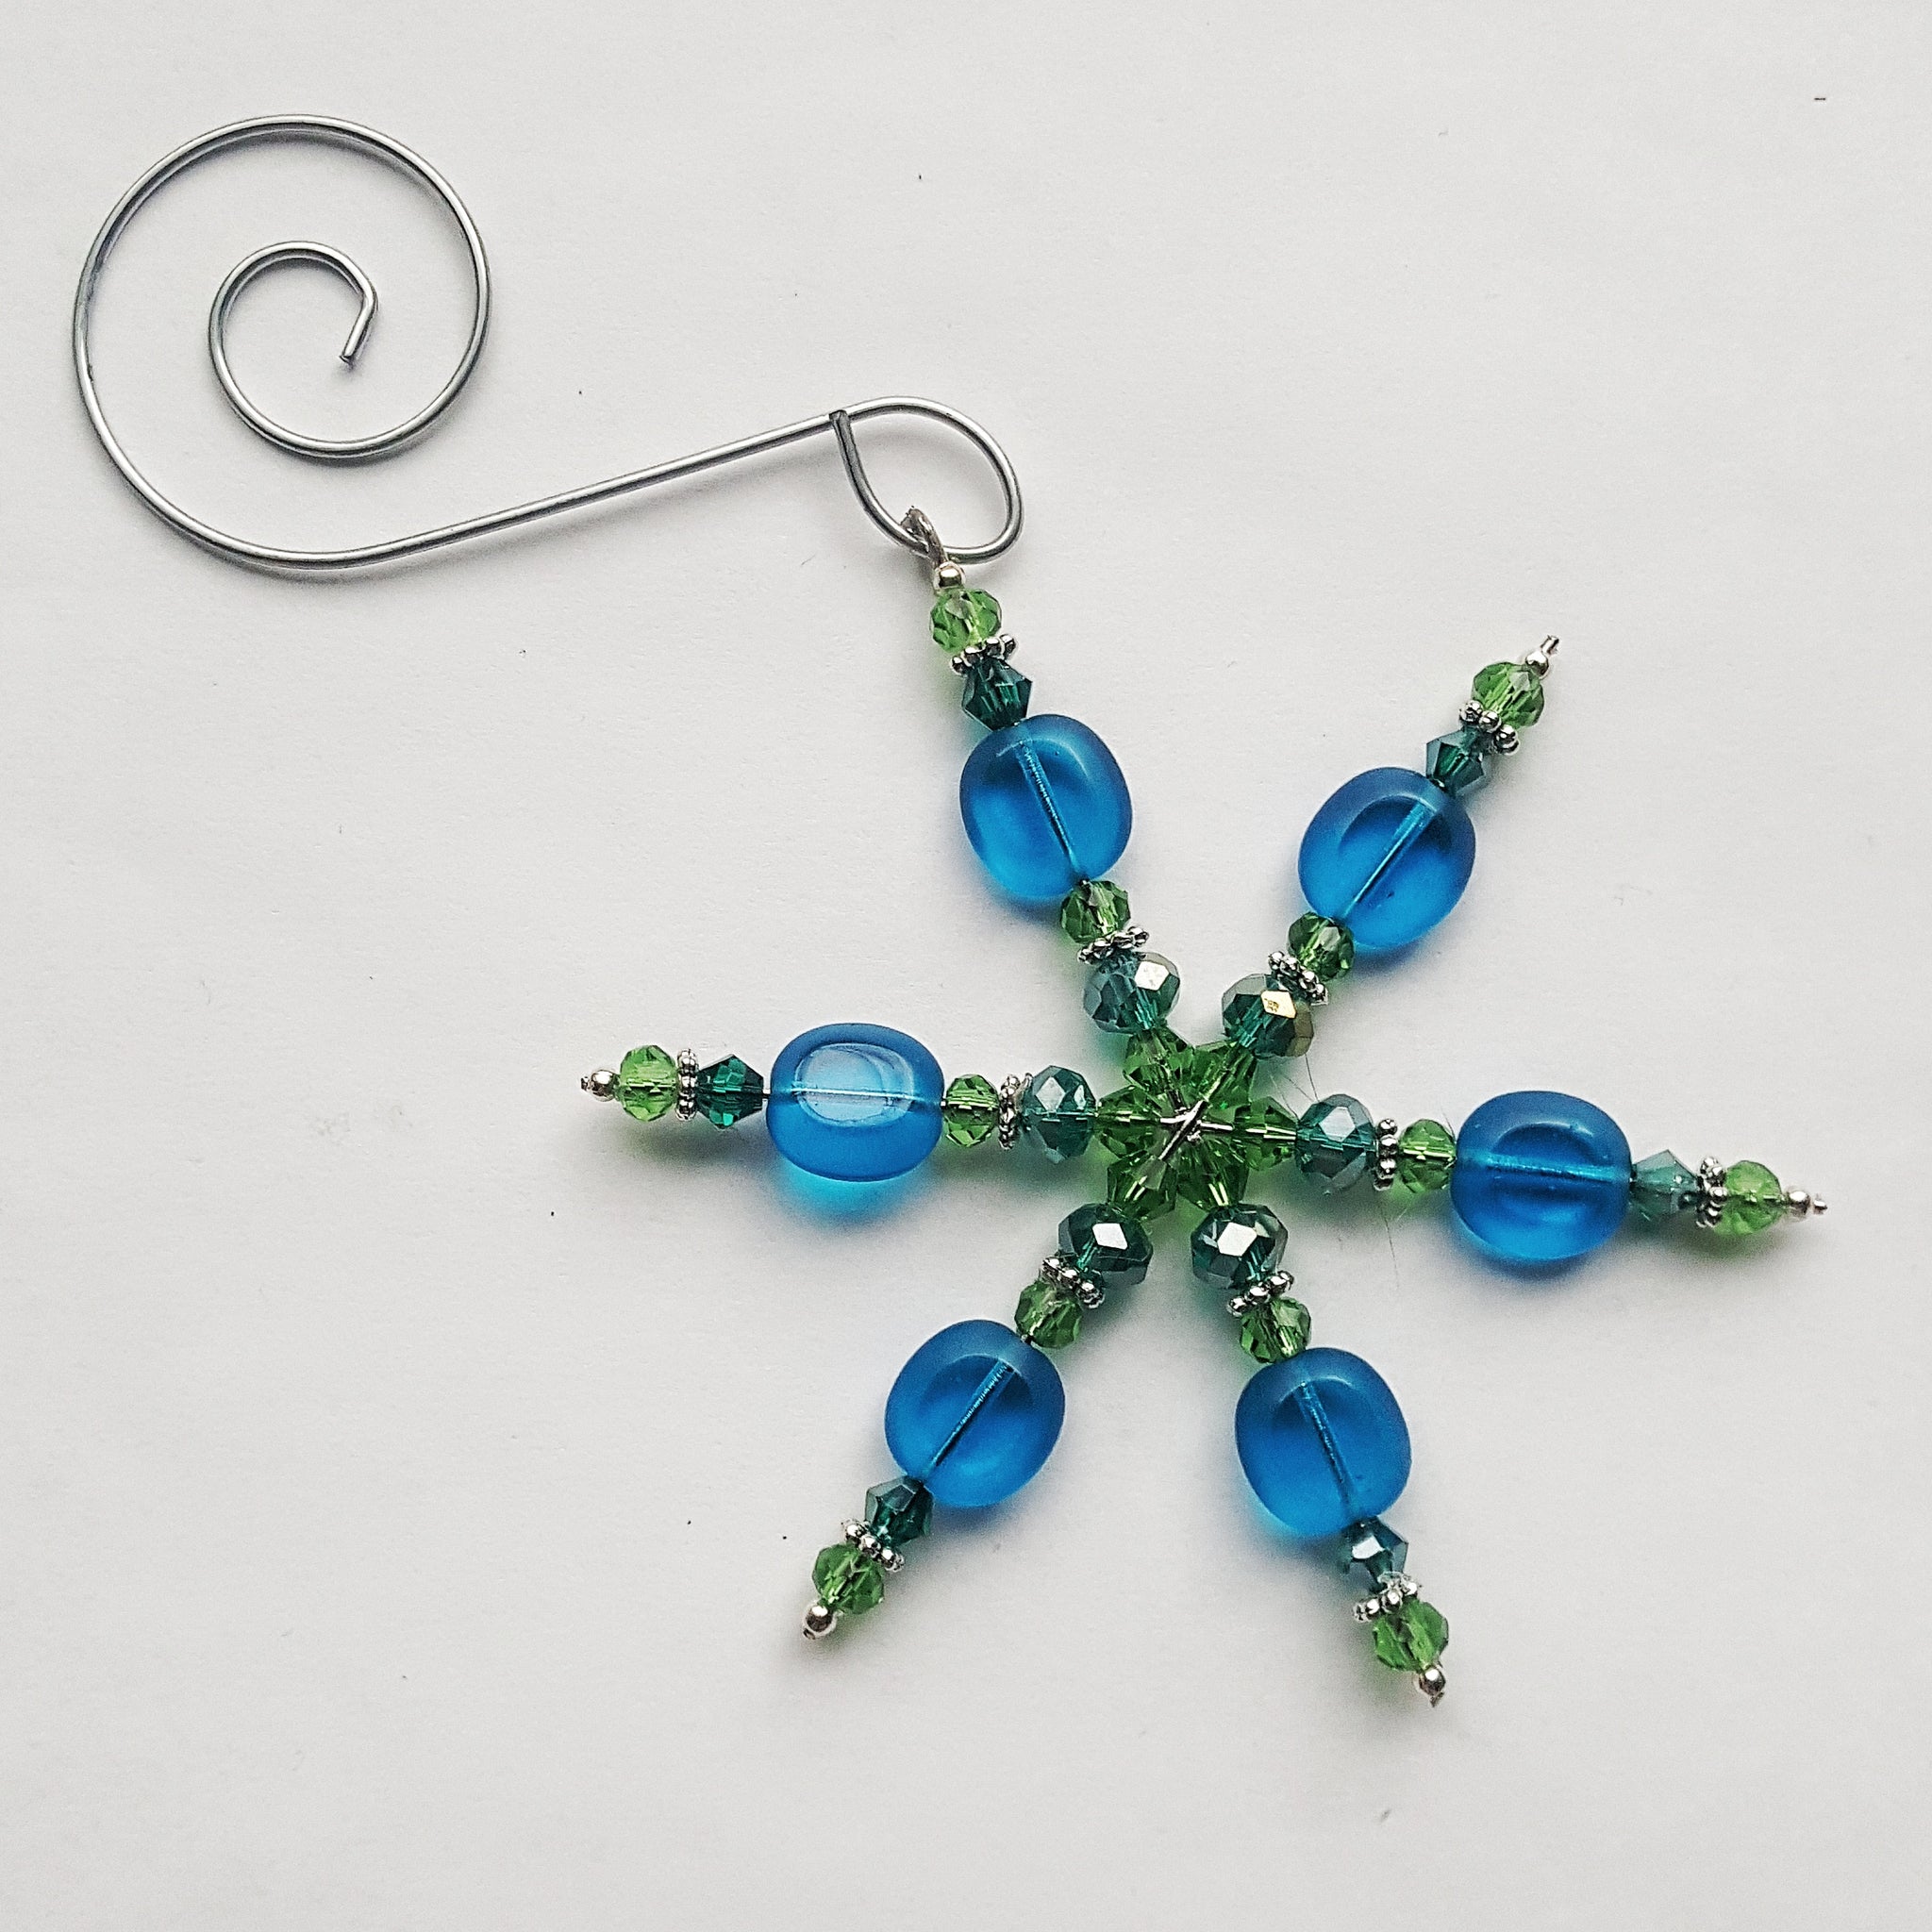 Blue and Green Snowflake Christmas Ornament Handmade Gift